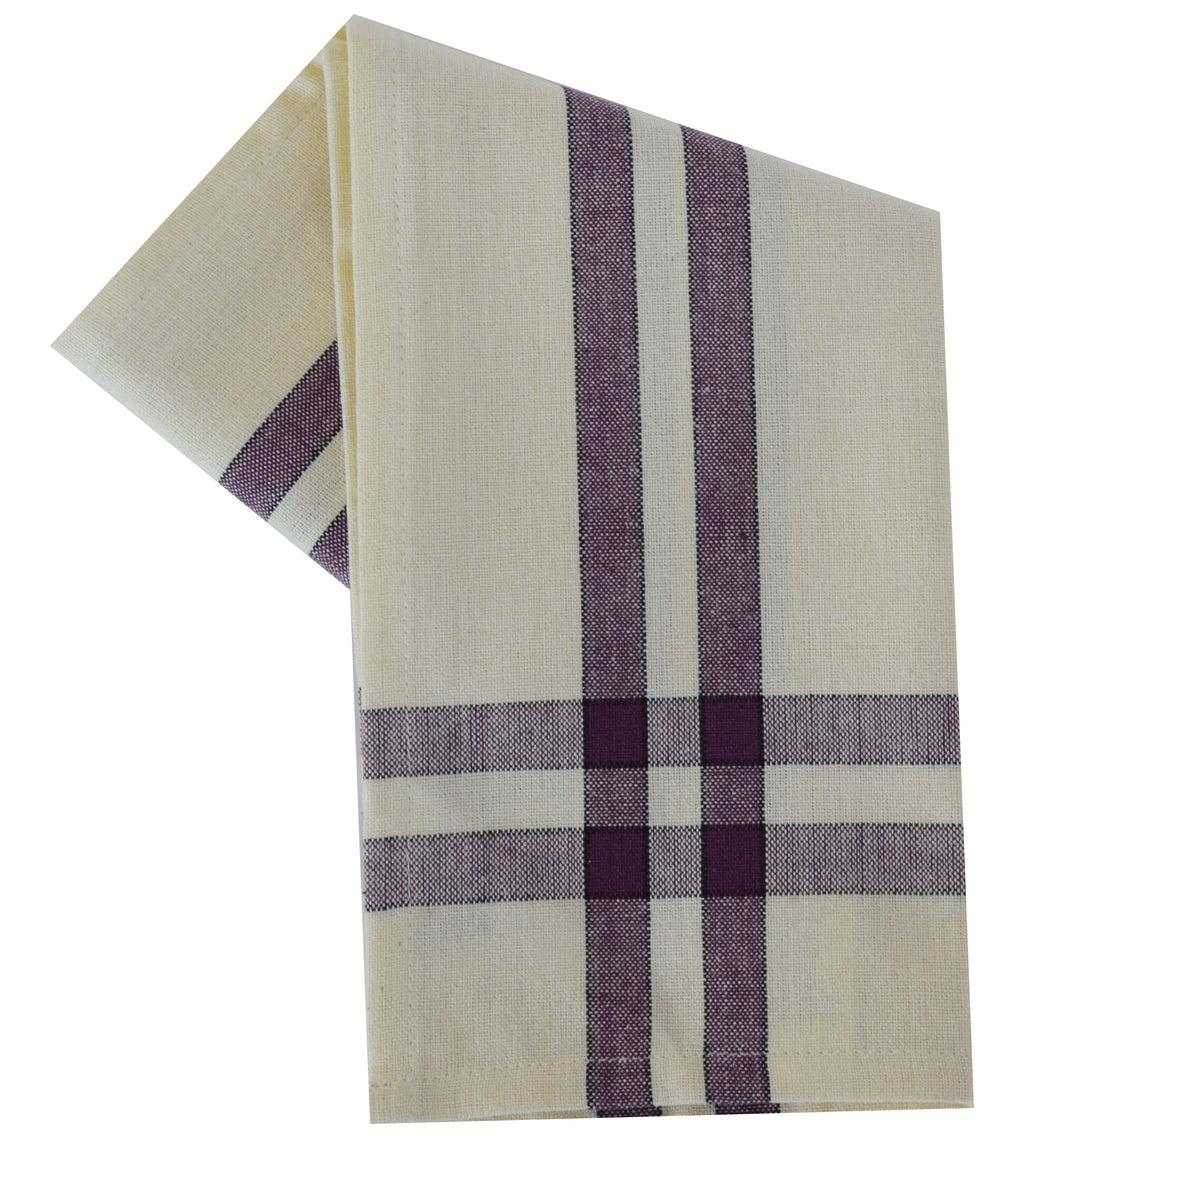 Halloween Seasonal Towel Set of 3 - Two Stripe Border on Cream